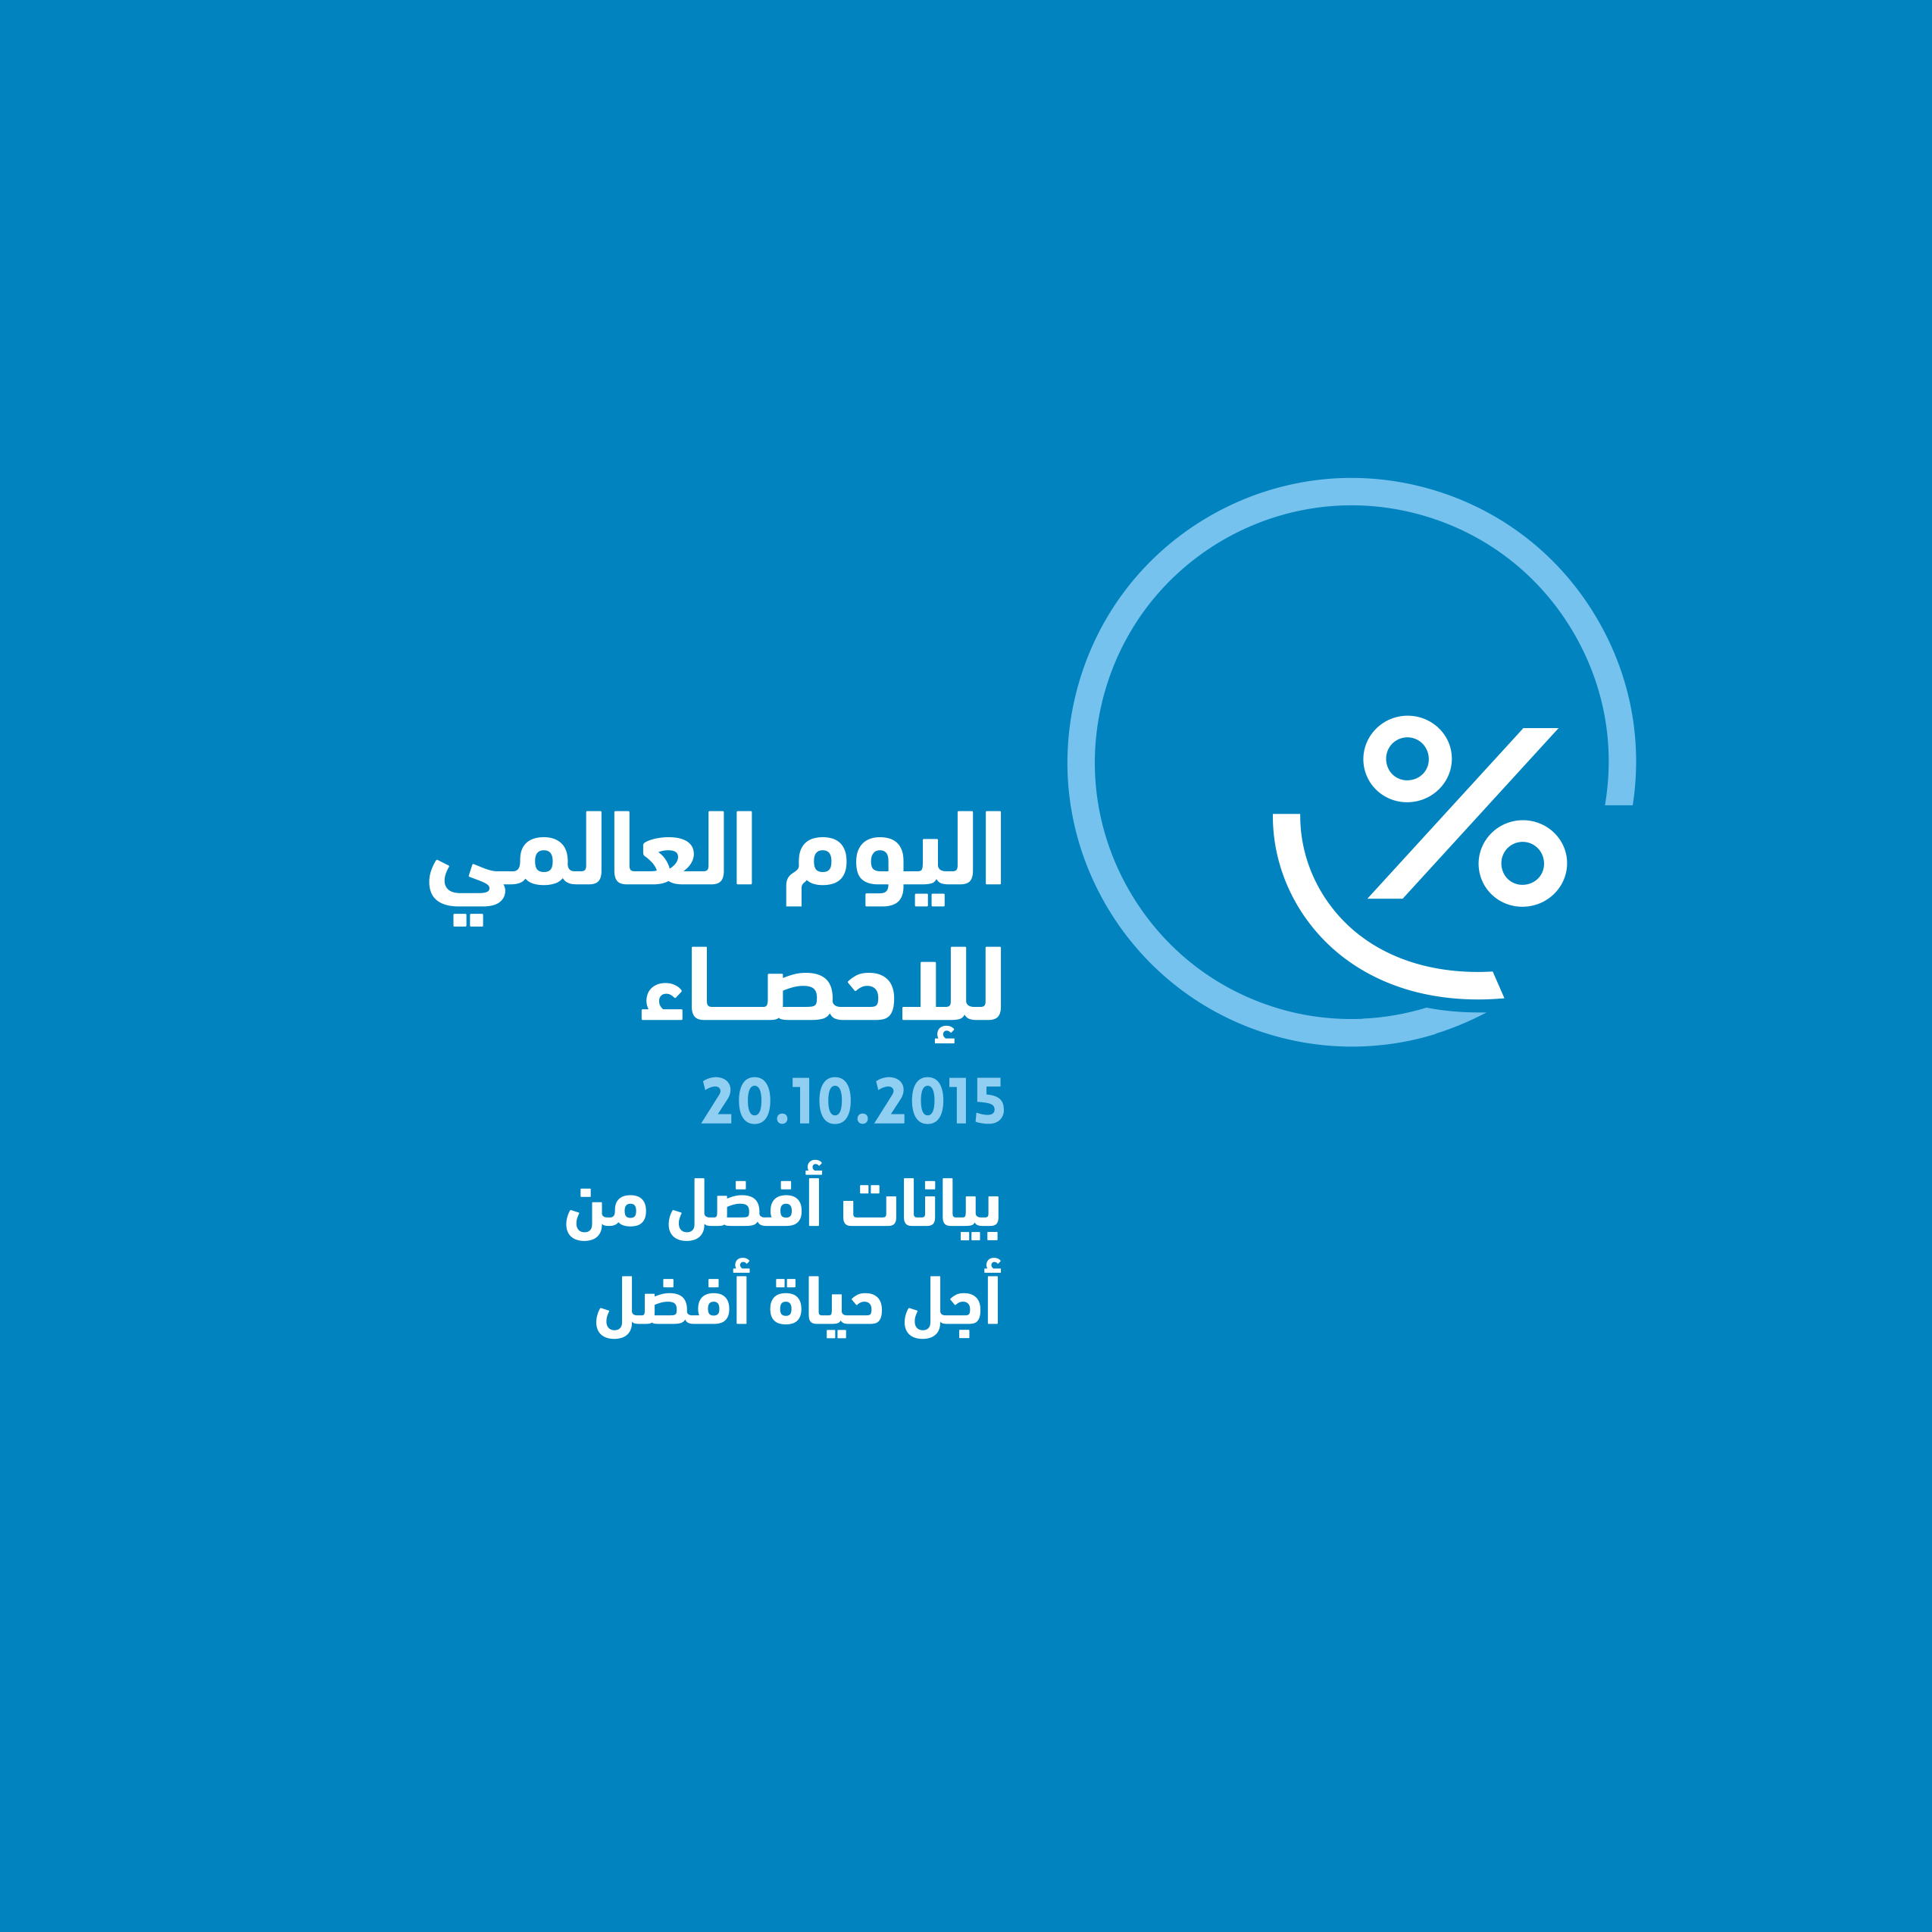 World Statistics Day Logo in Arabic